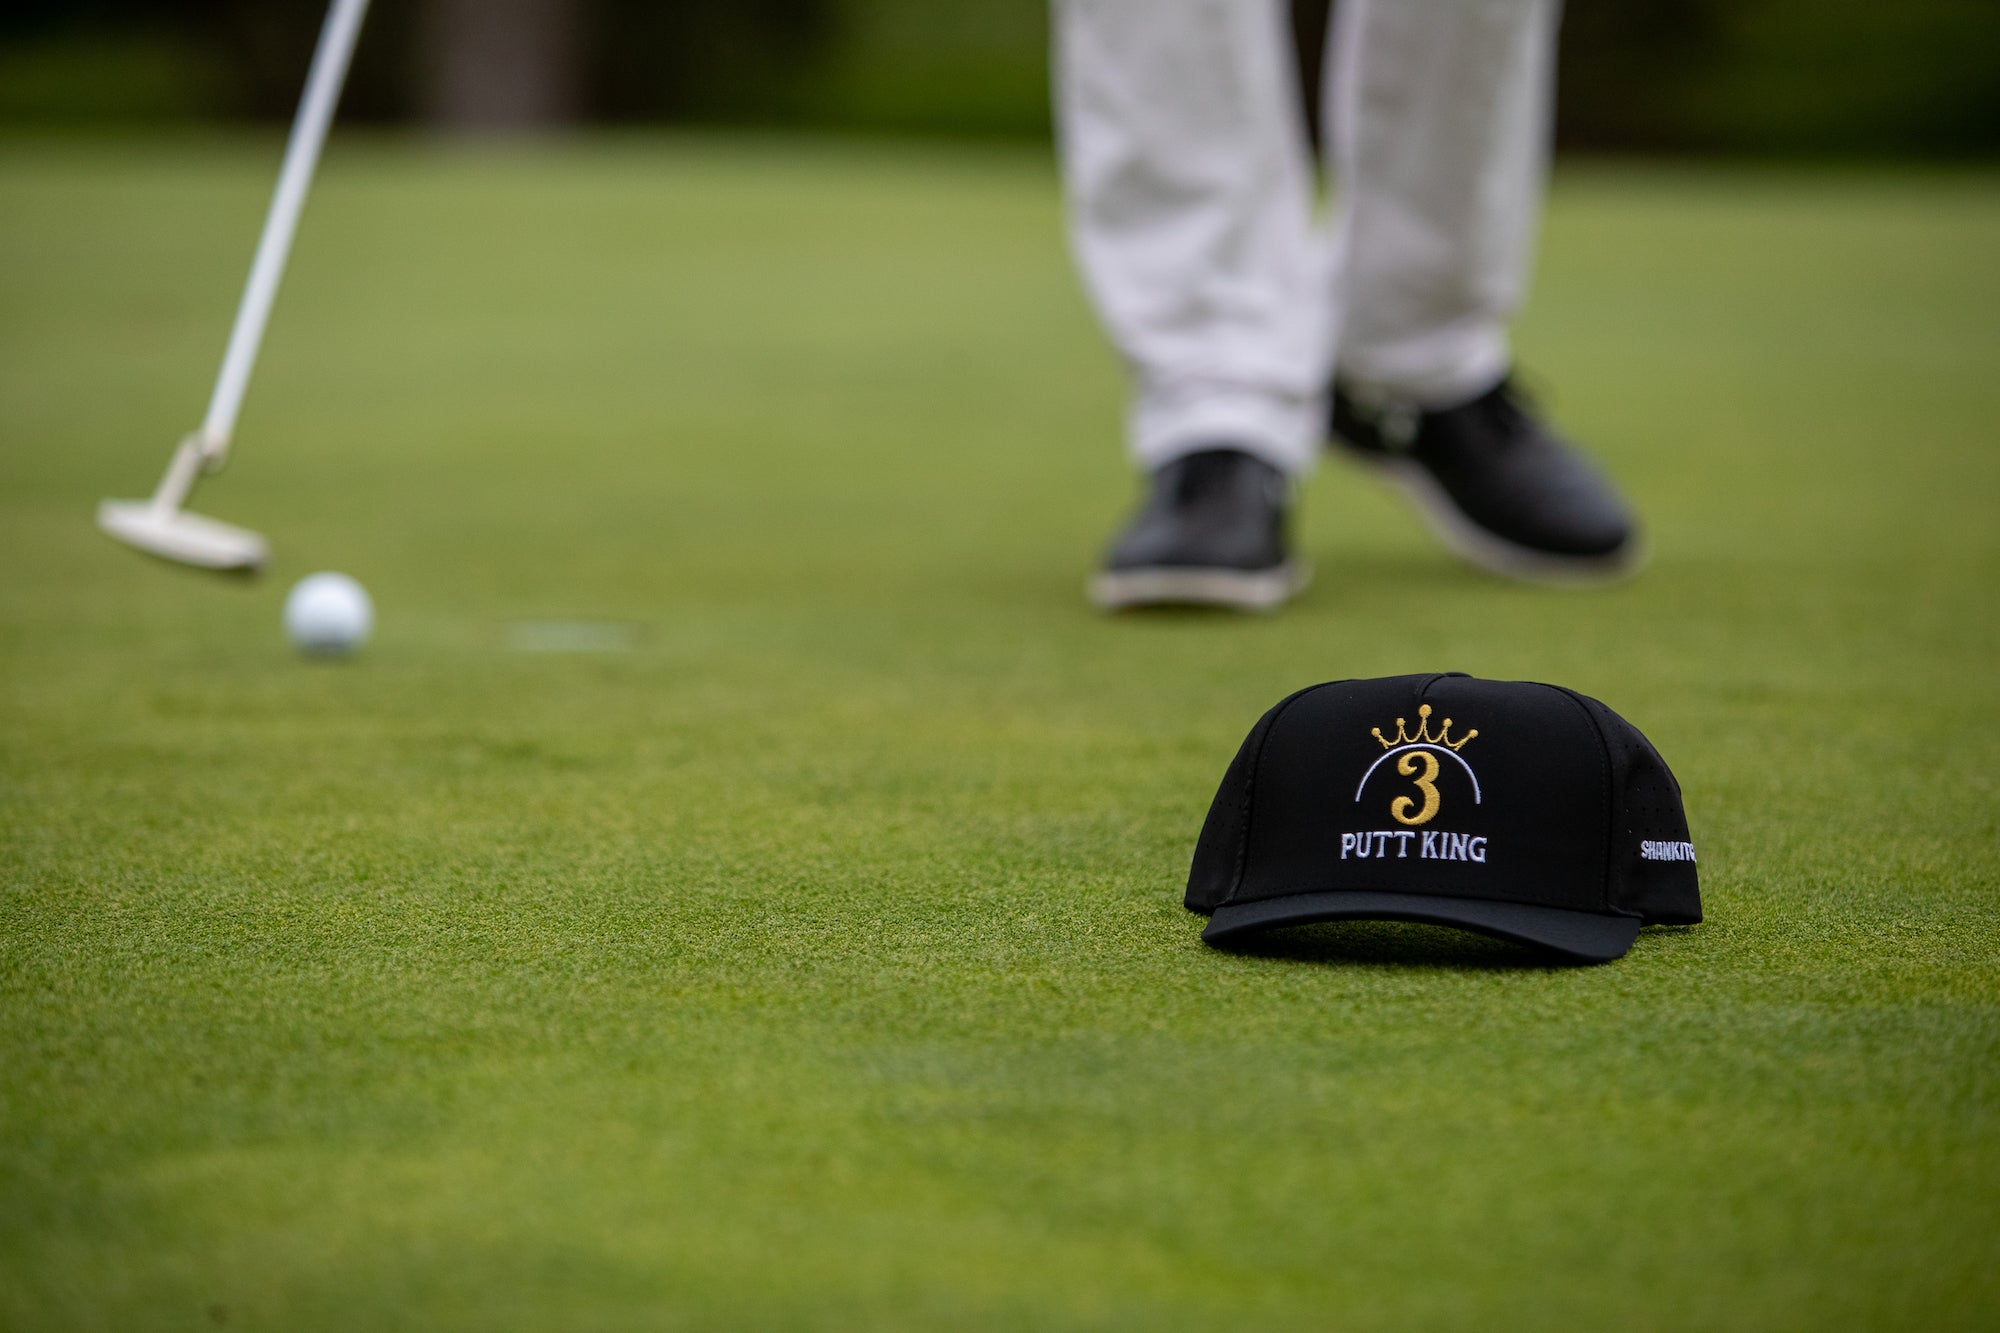 Shankitgolf Fore Adjustable Funny Golf Hat